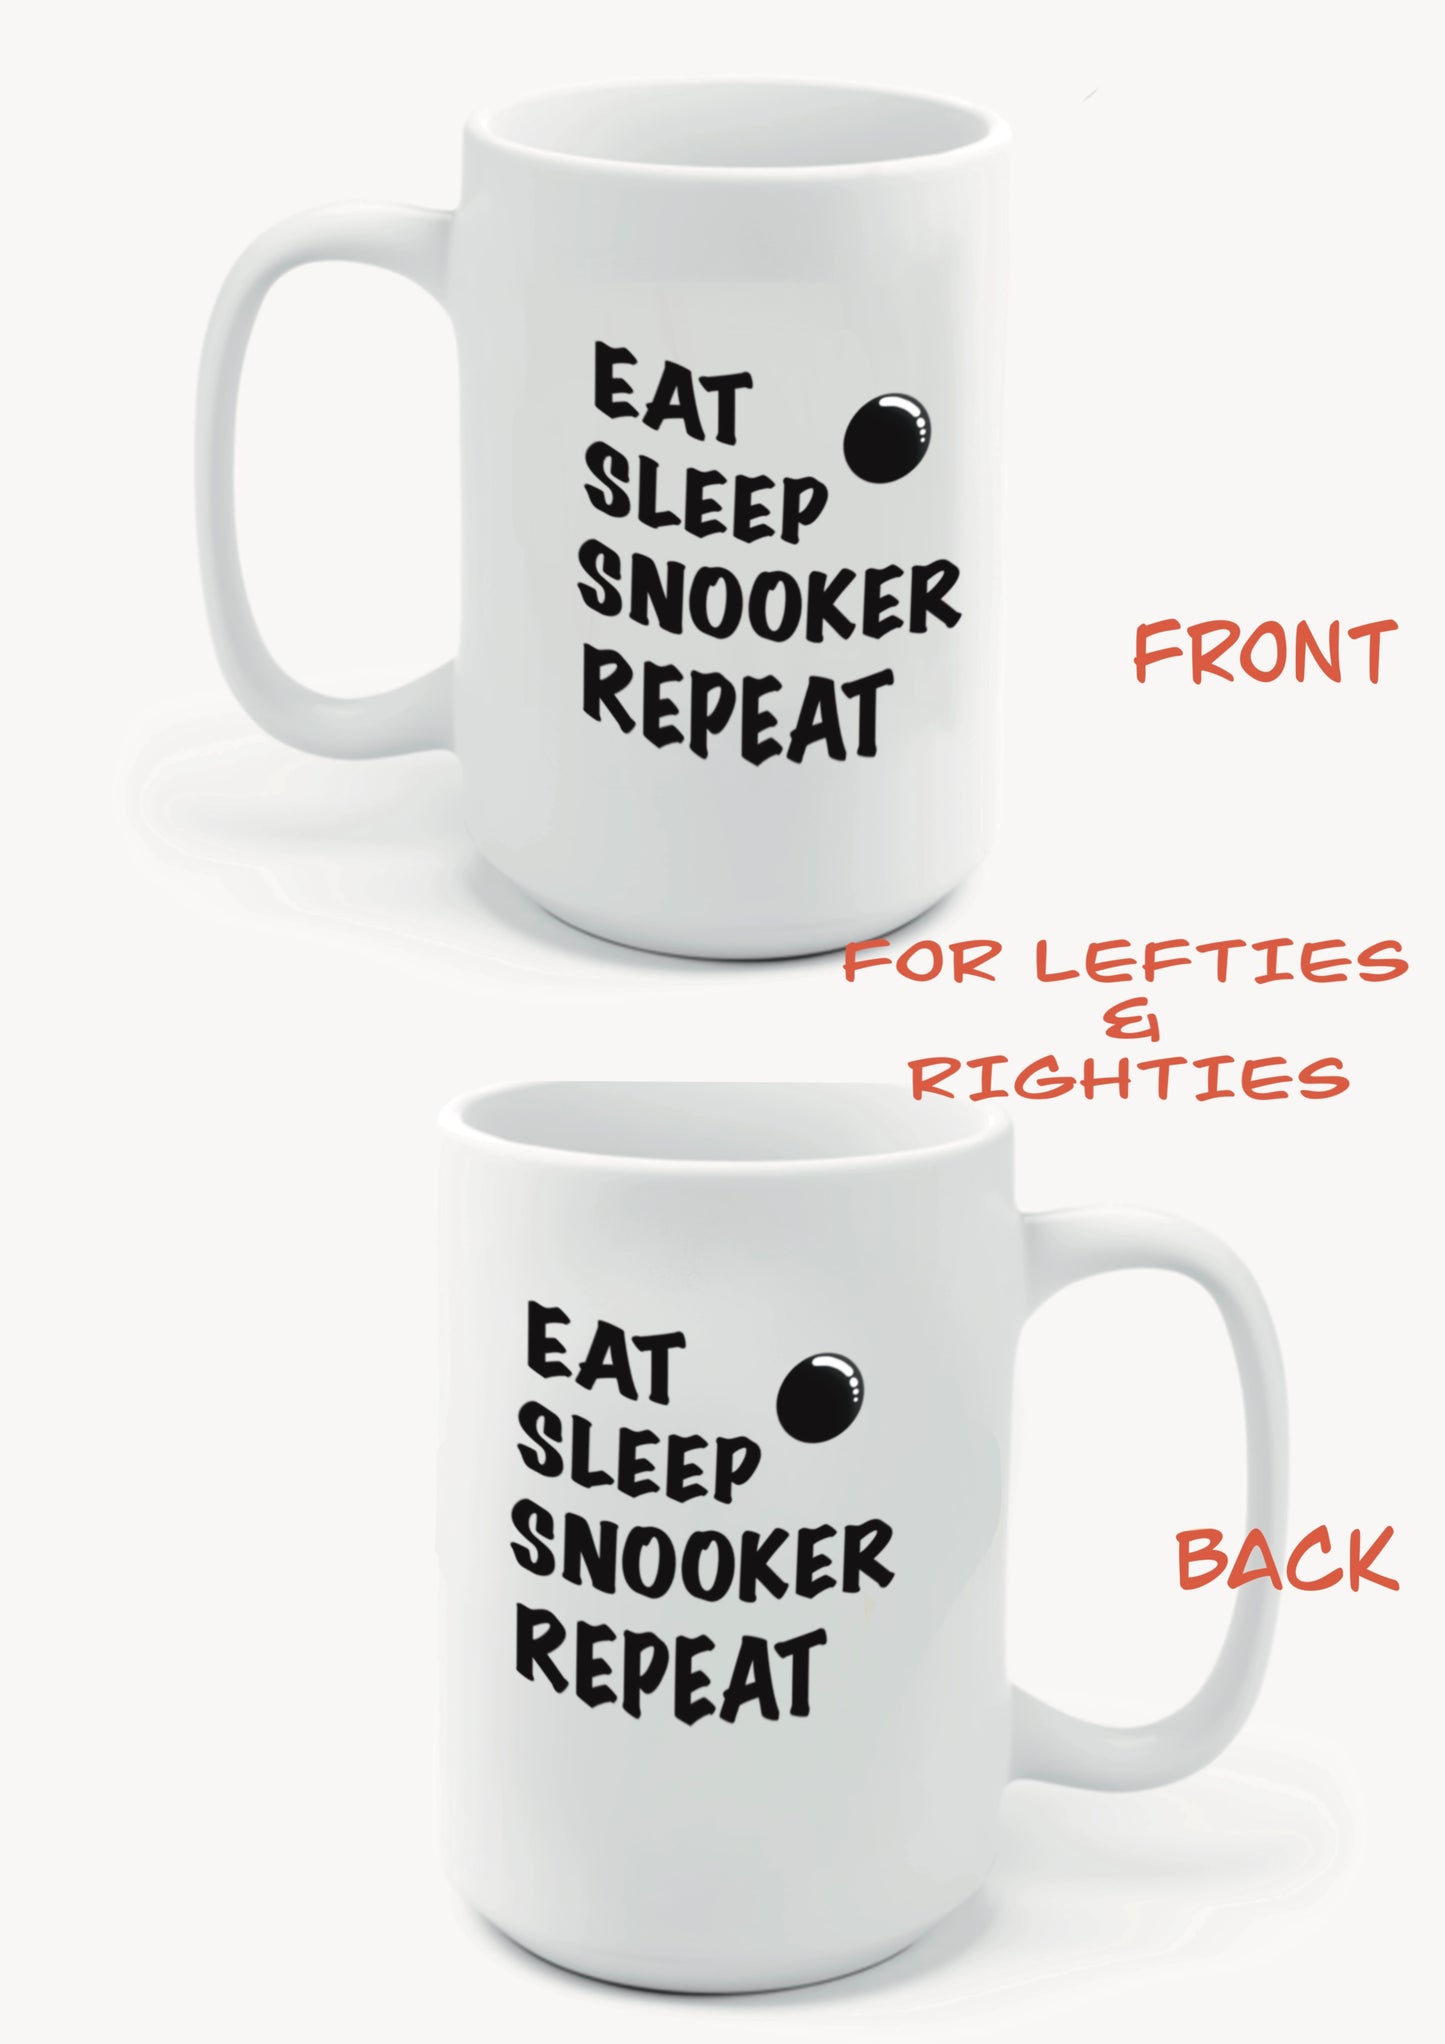 Snooker mug - Eat Sleep Snooker Repeat